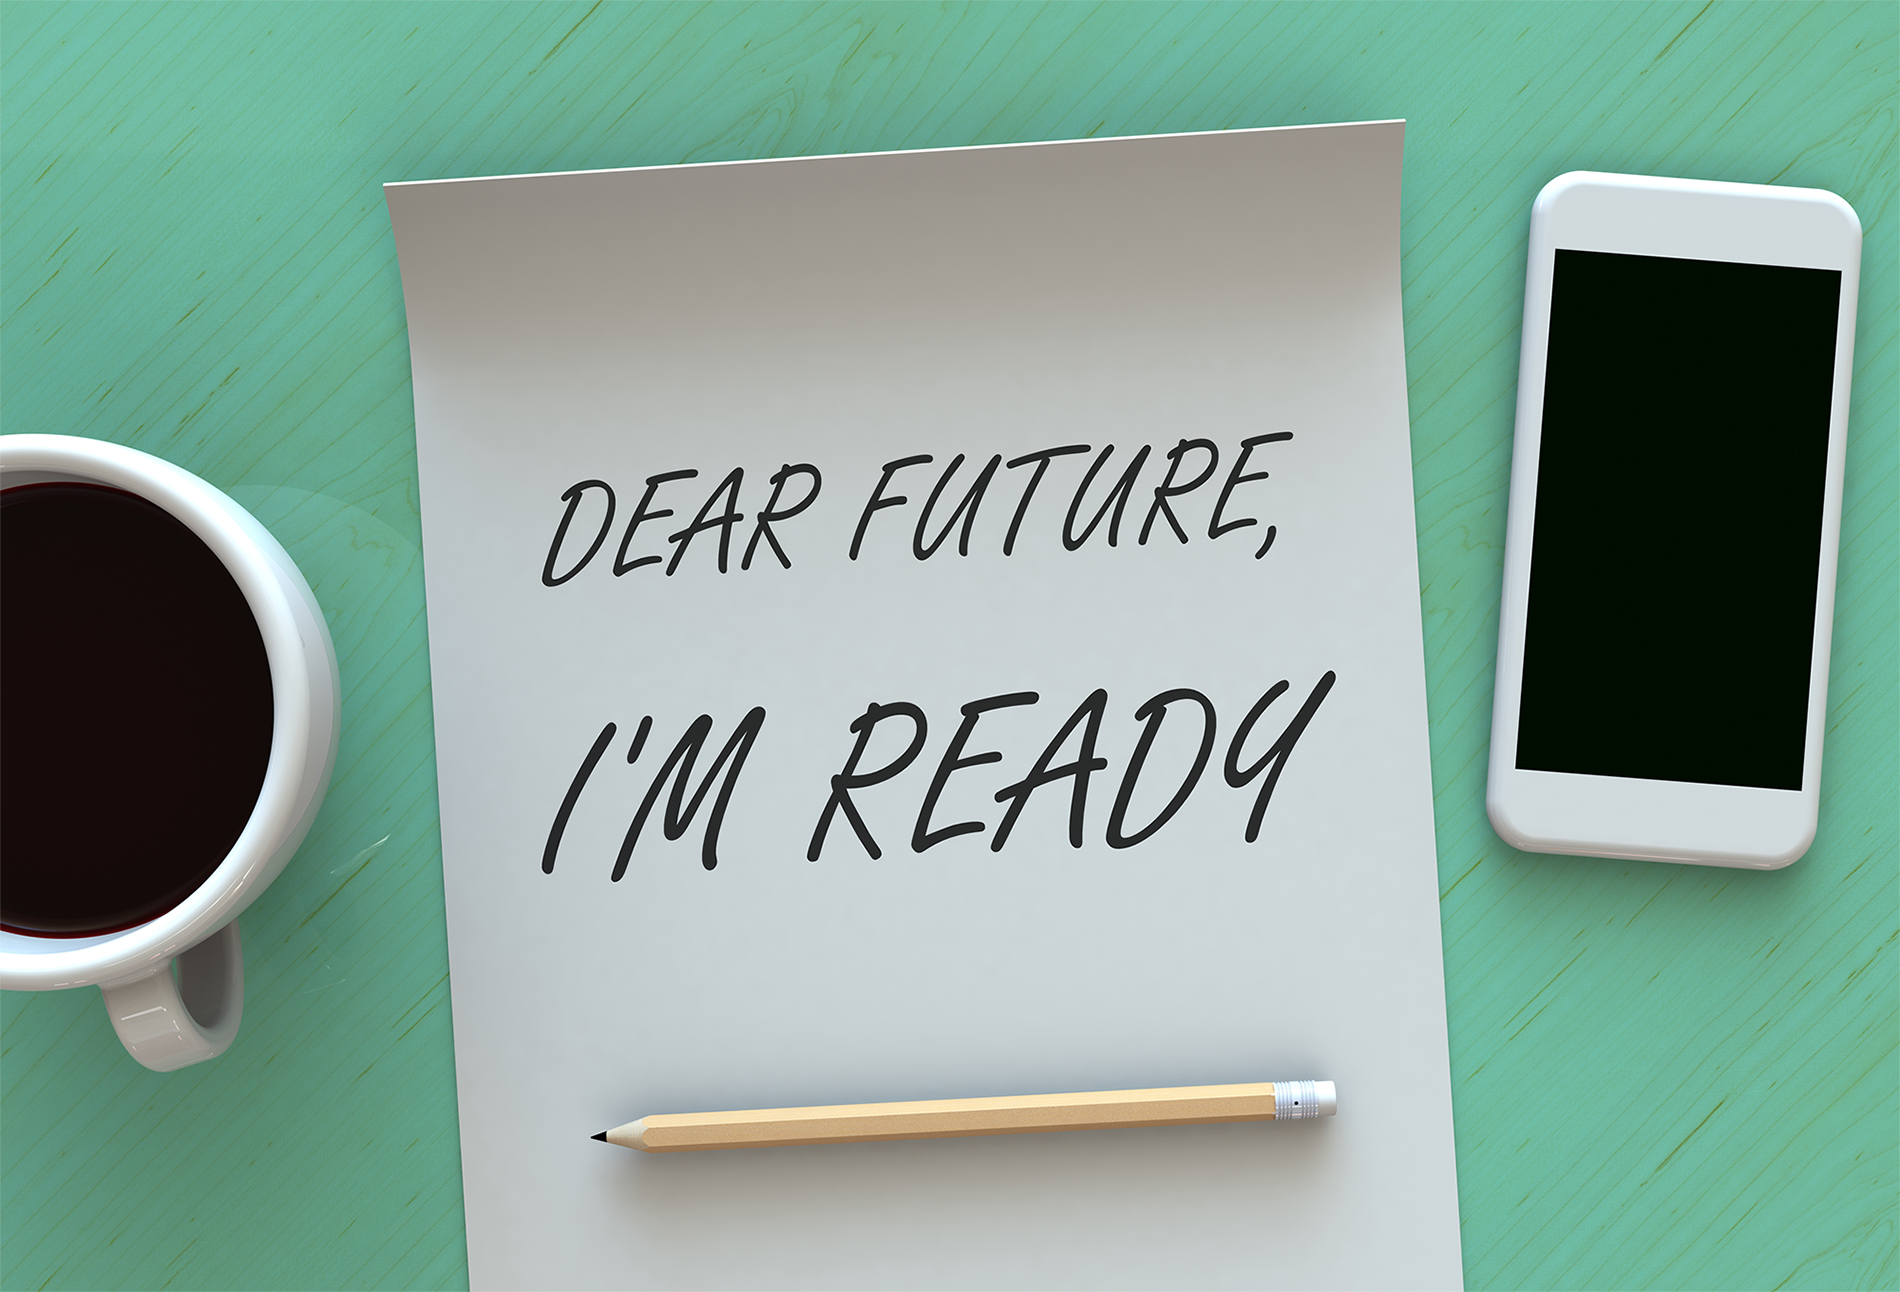 Dear Future Im Ready, message on paper